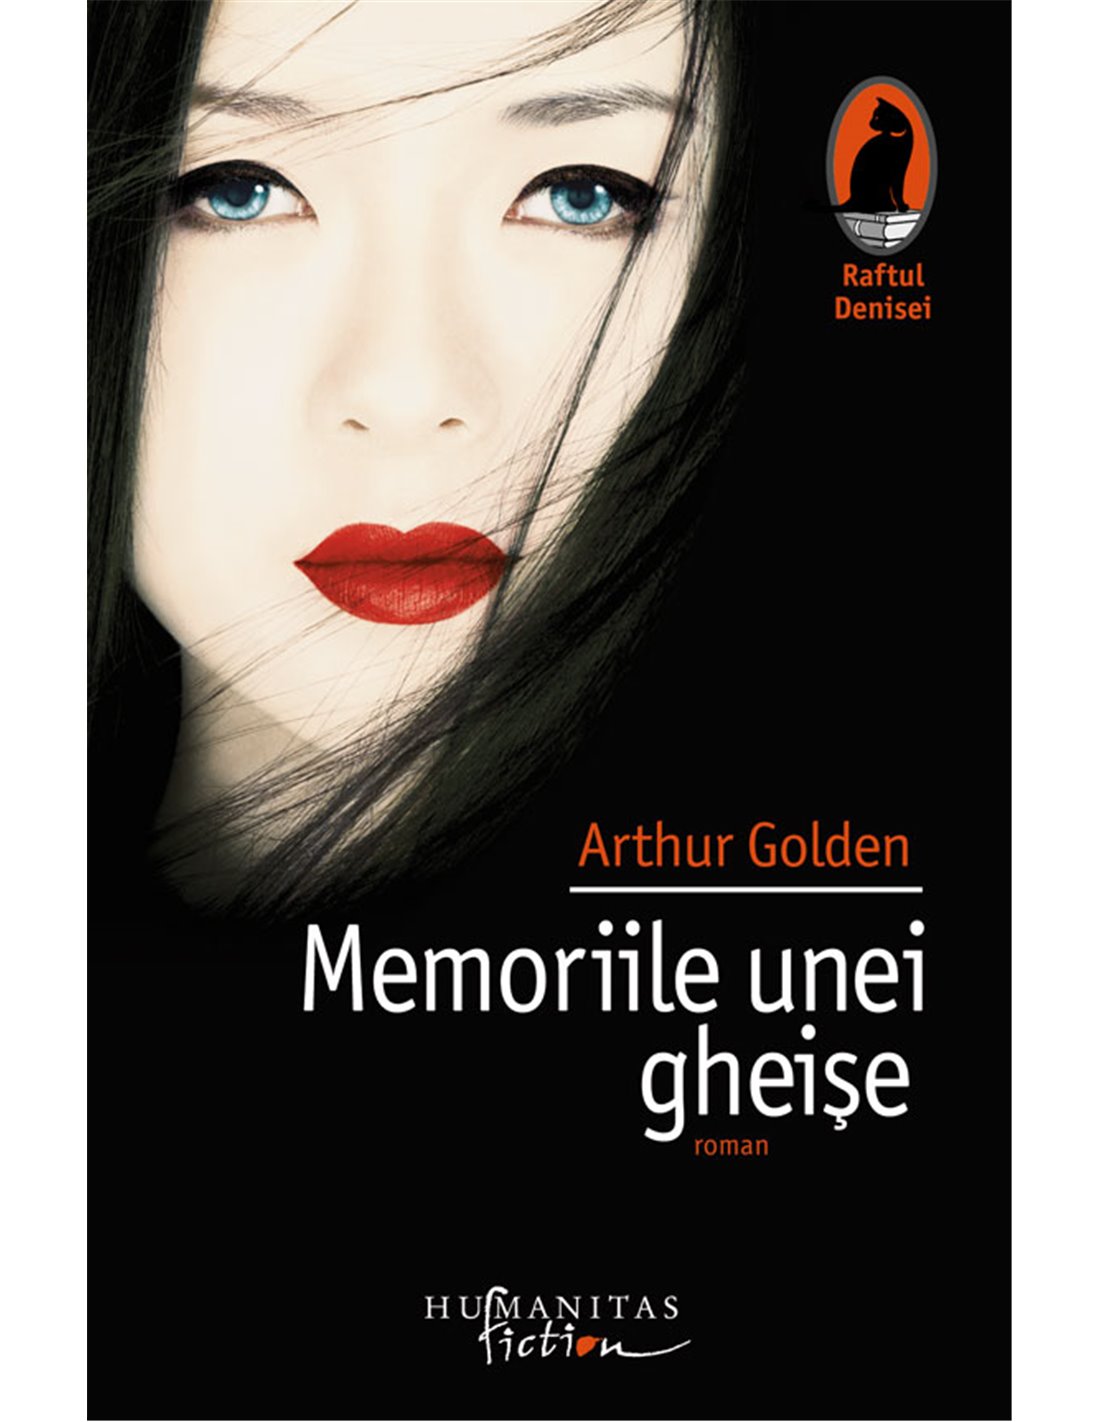 Memoriile unei gheise  -  Arthur Golden | Editura Humanitas